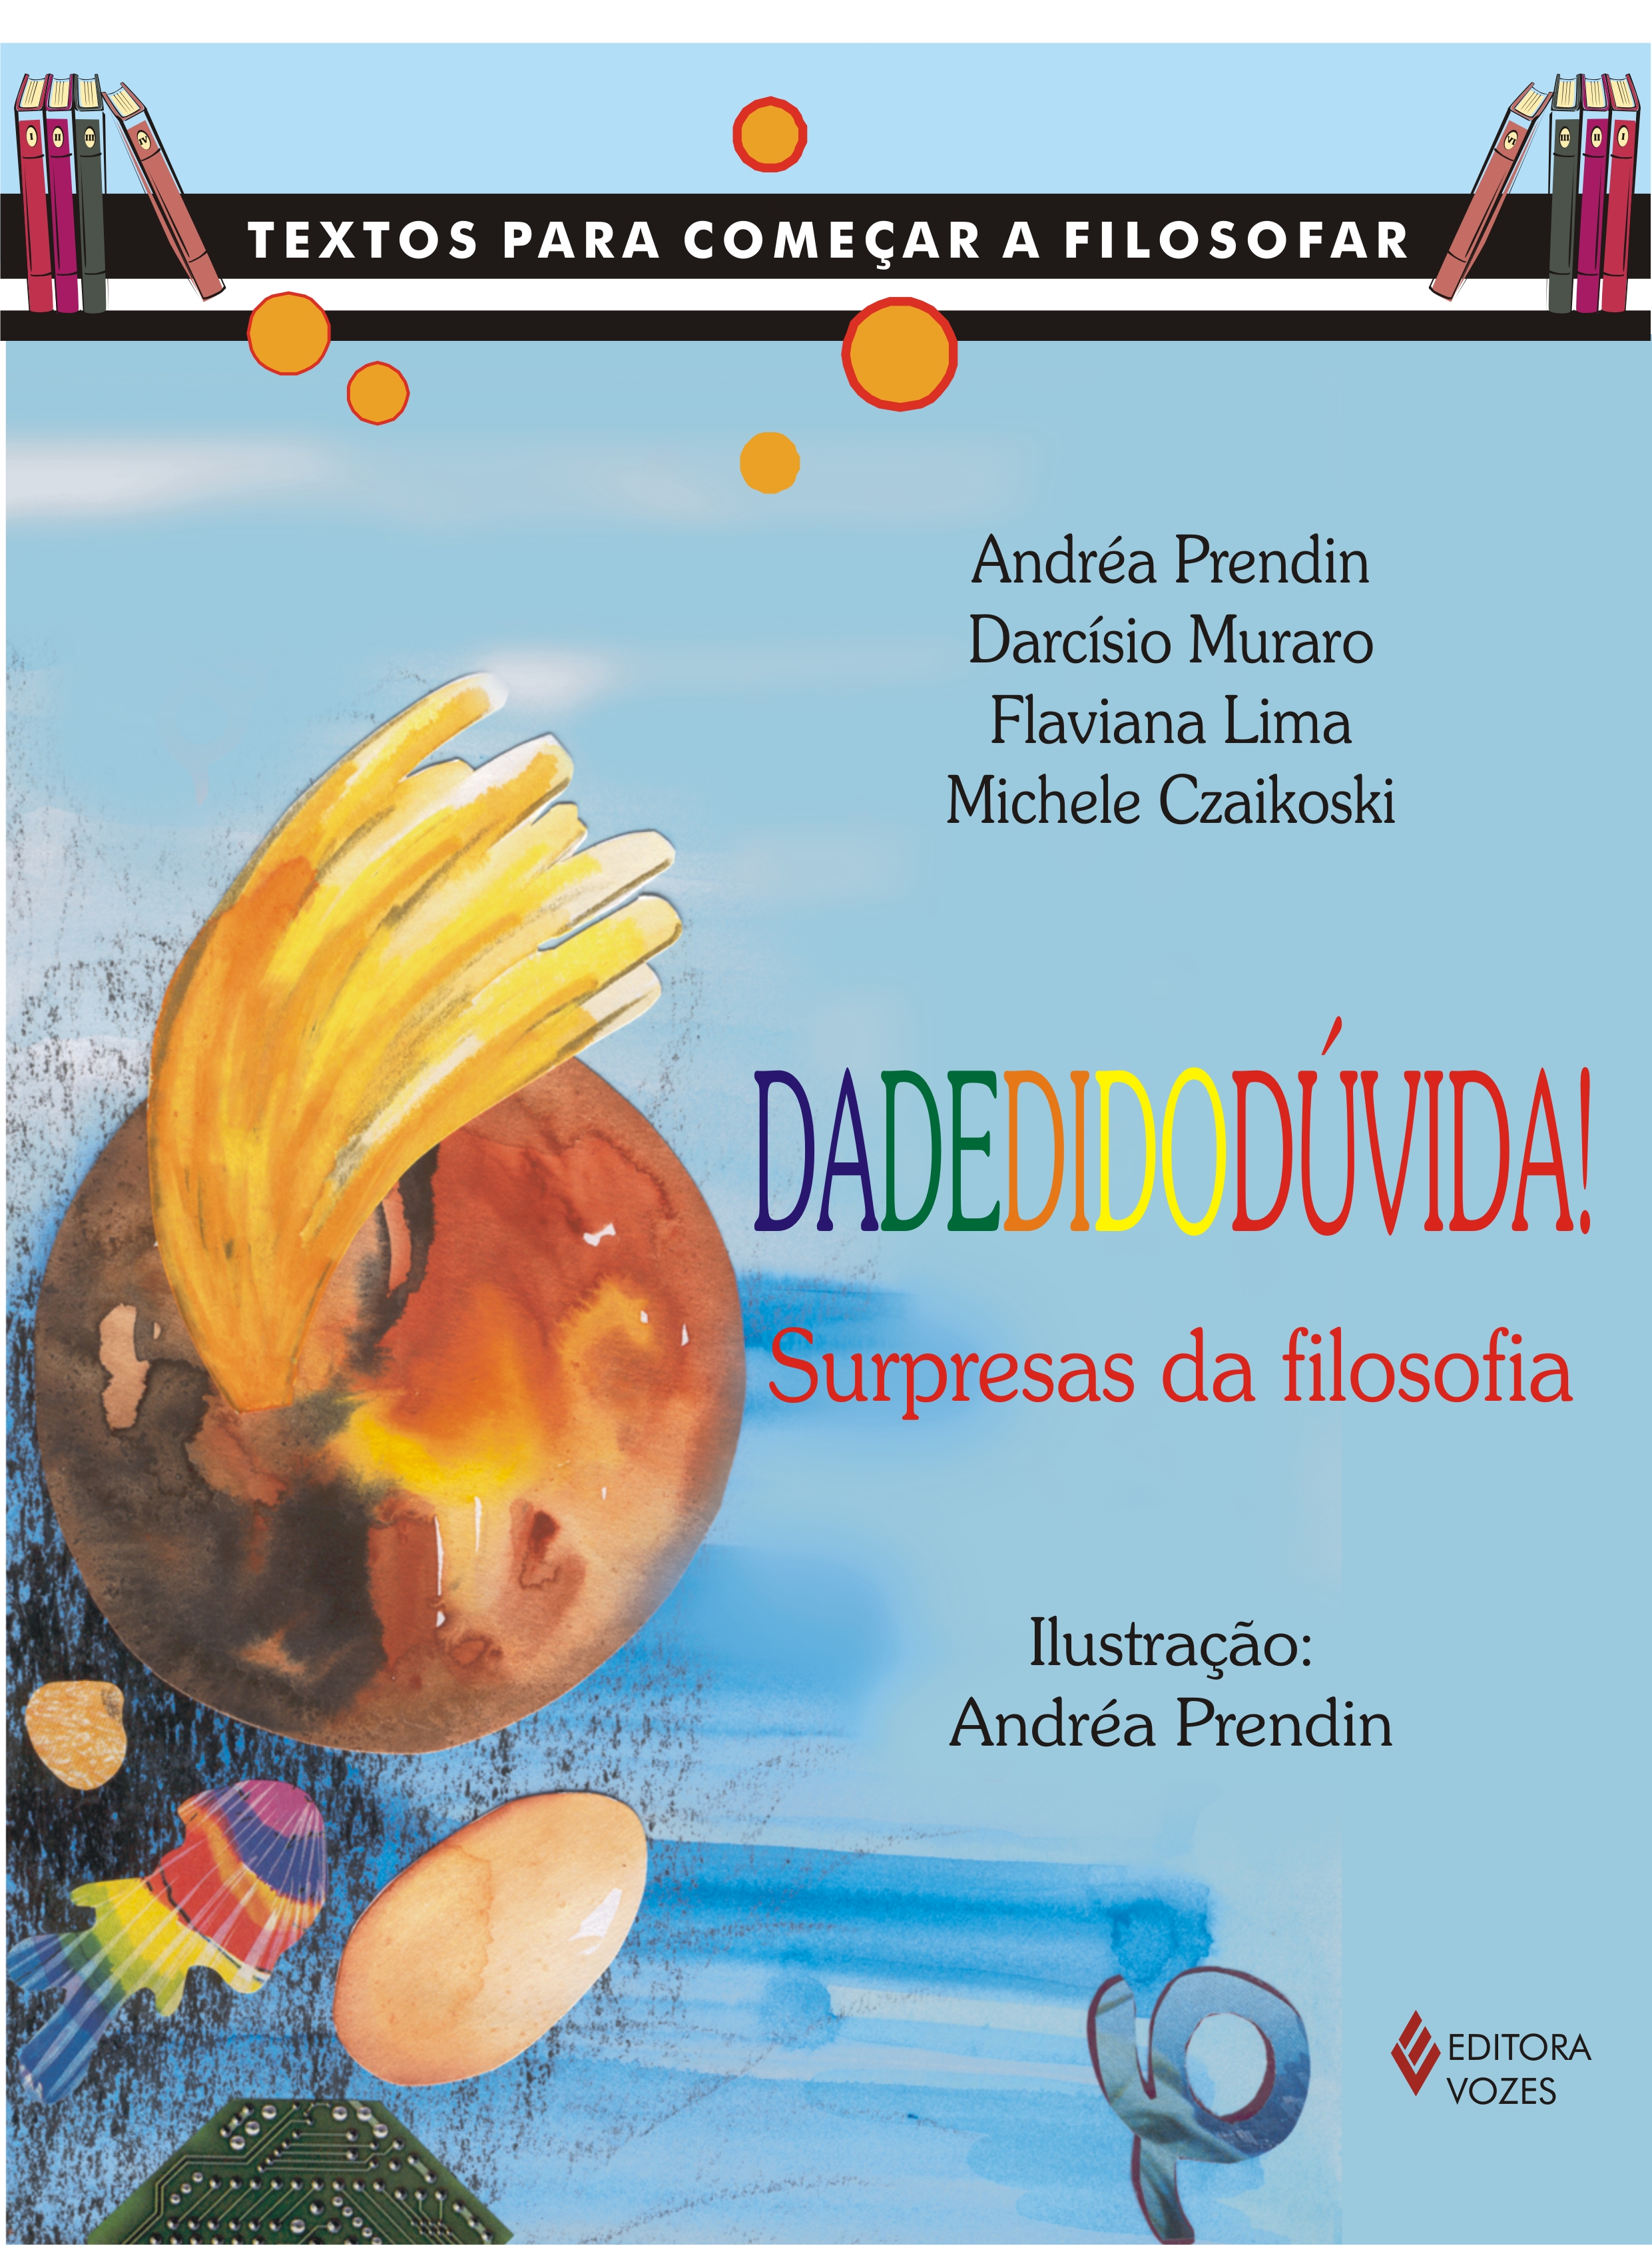 DADEDIDODUVIDA! - SURPRESAS DA FILOSOFIA